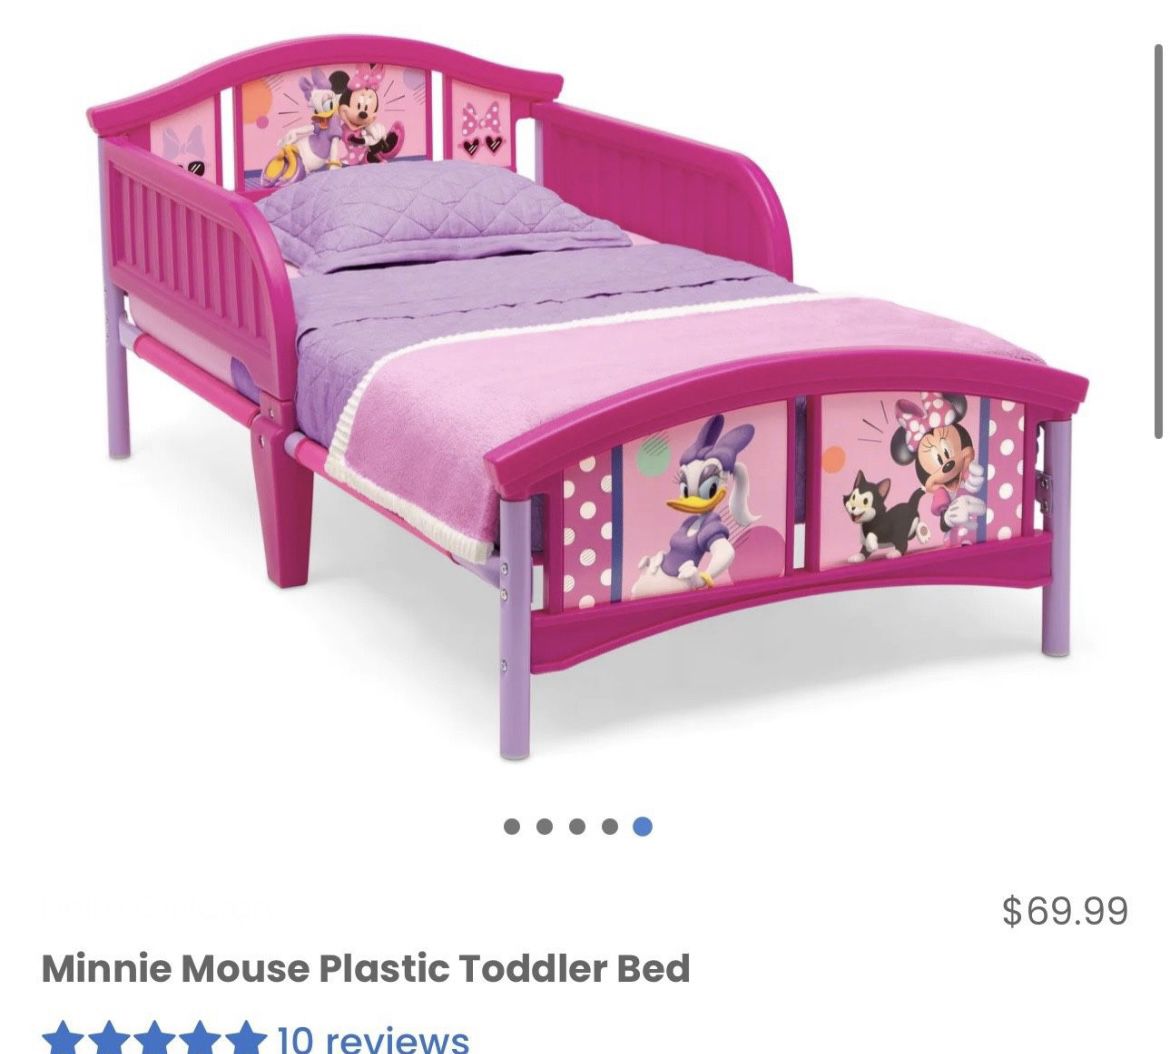 Minnie Mouse Plastic Toddler Bed Frame/ Bed/ Sleep/ Kids/ Toddler/ Bedroom/ Furniture/ Bed Frame/ Toys/ New